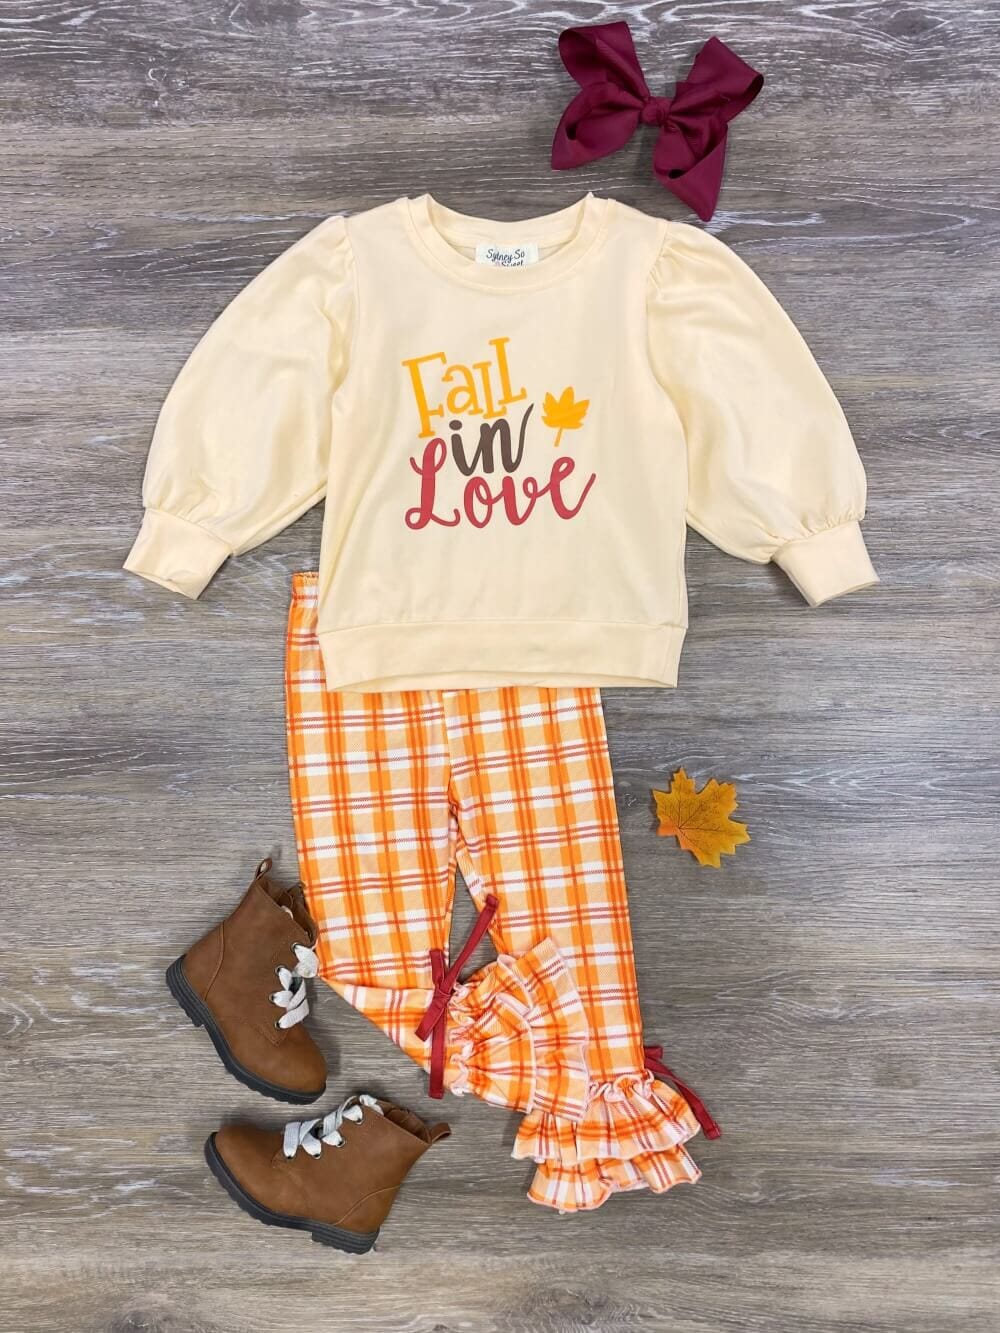 Fall in Love Ruffle Bottom Orange Plaid Girls Outfit - Sydney So Sweet